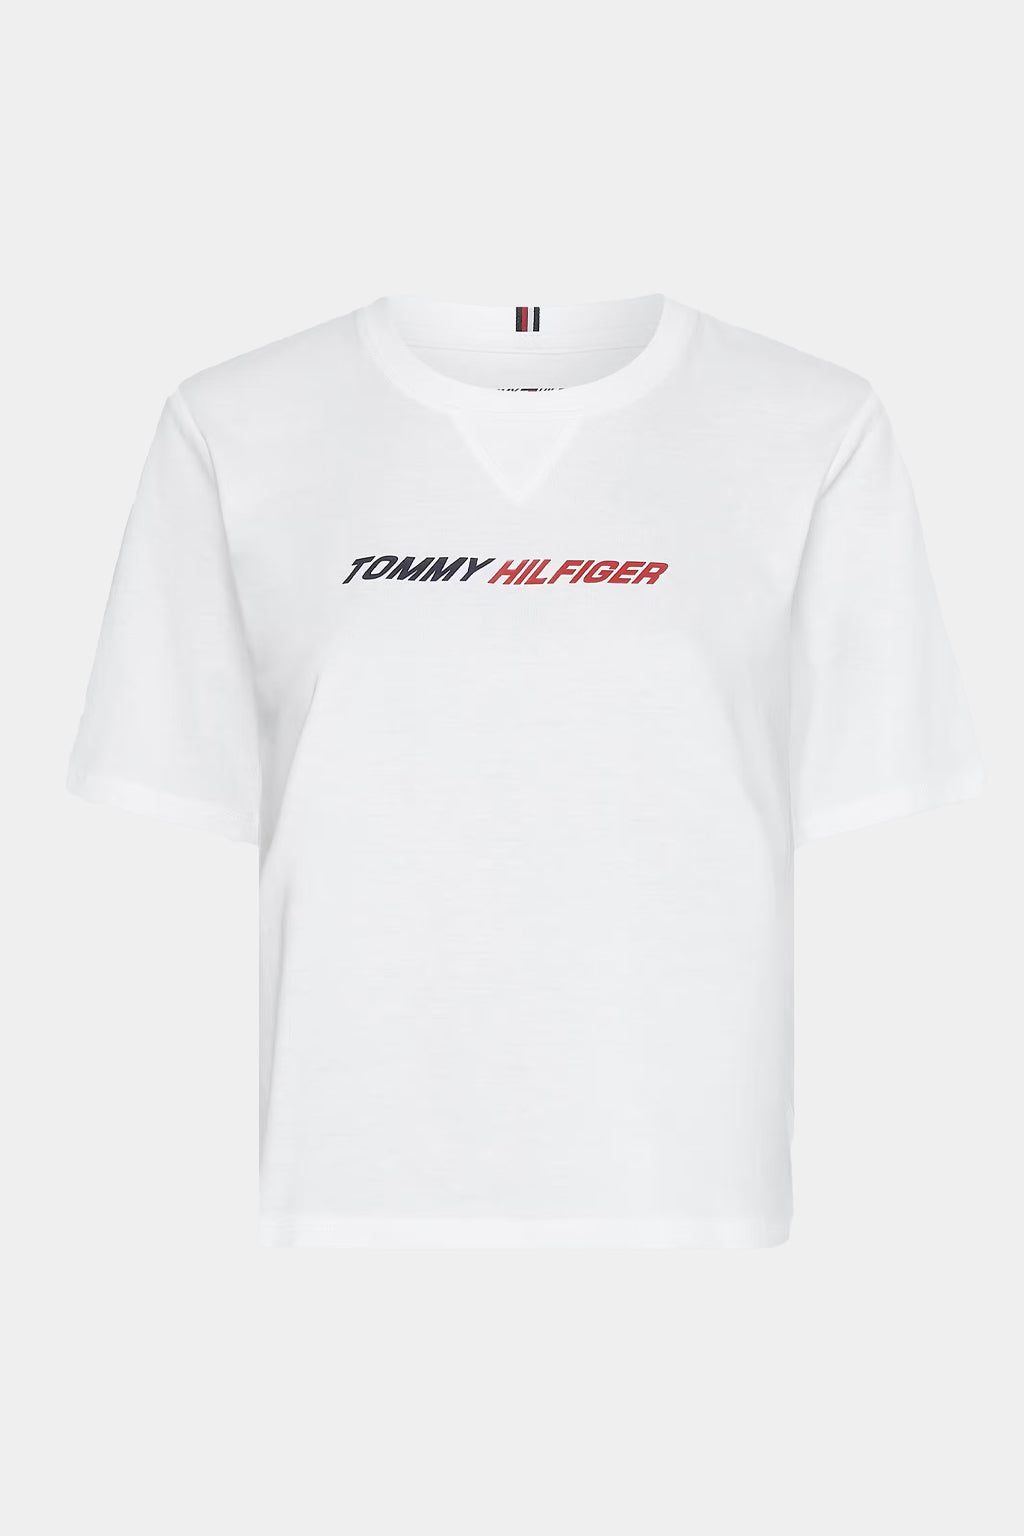 Tommy Hilfiger - Sport Moisture Wicking T-shirt